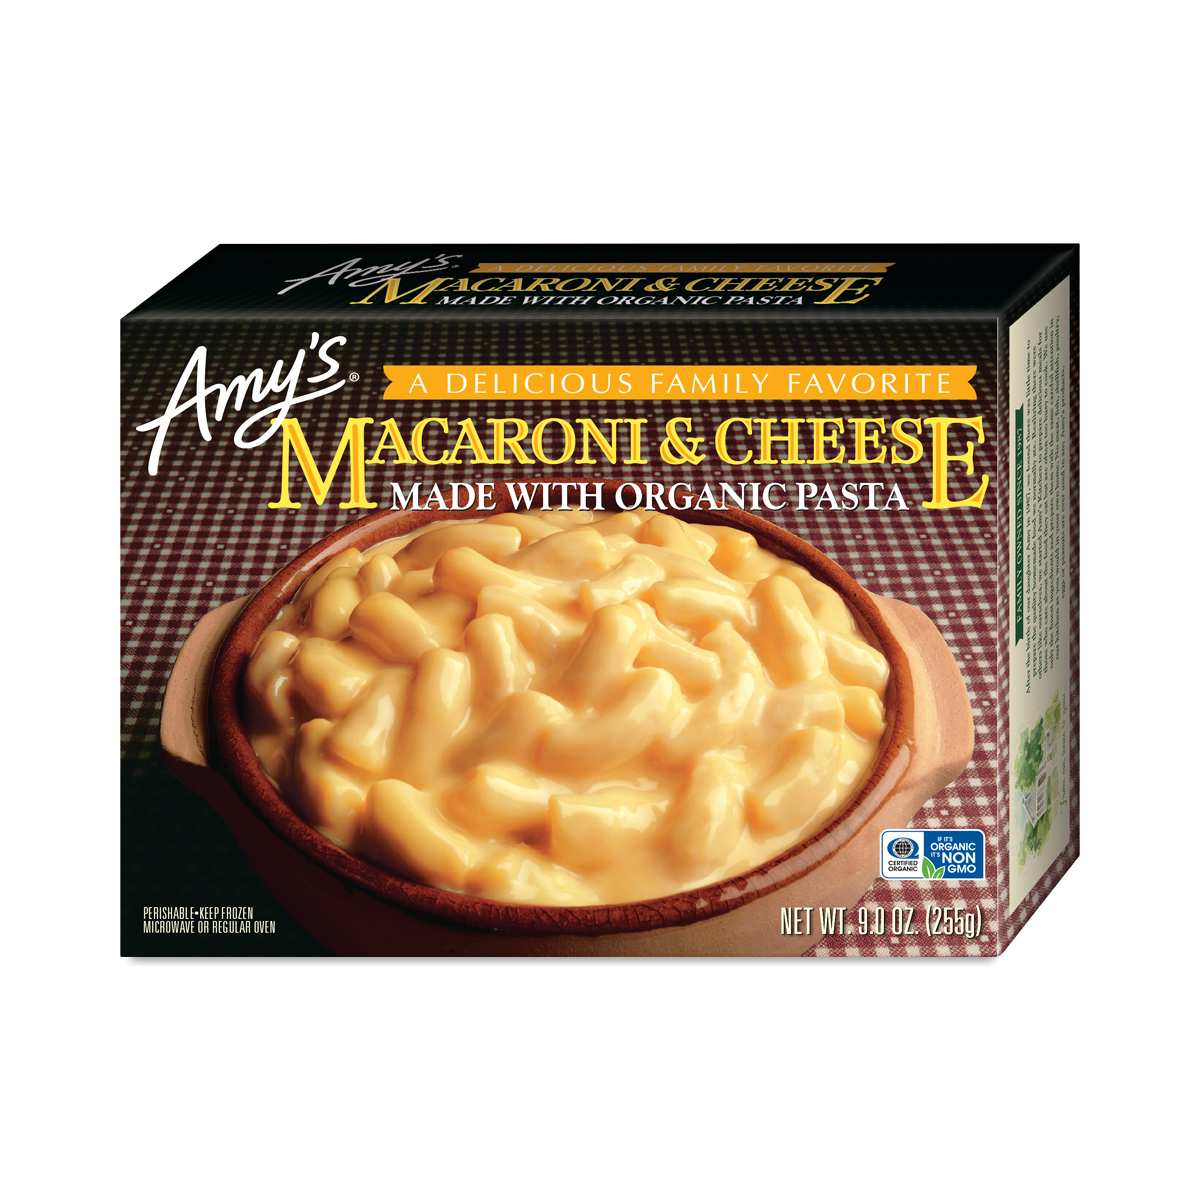 Amy's Macaroni & Cheese 9 oz box